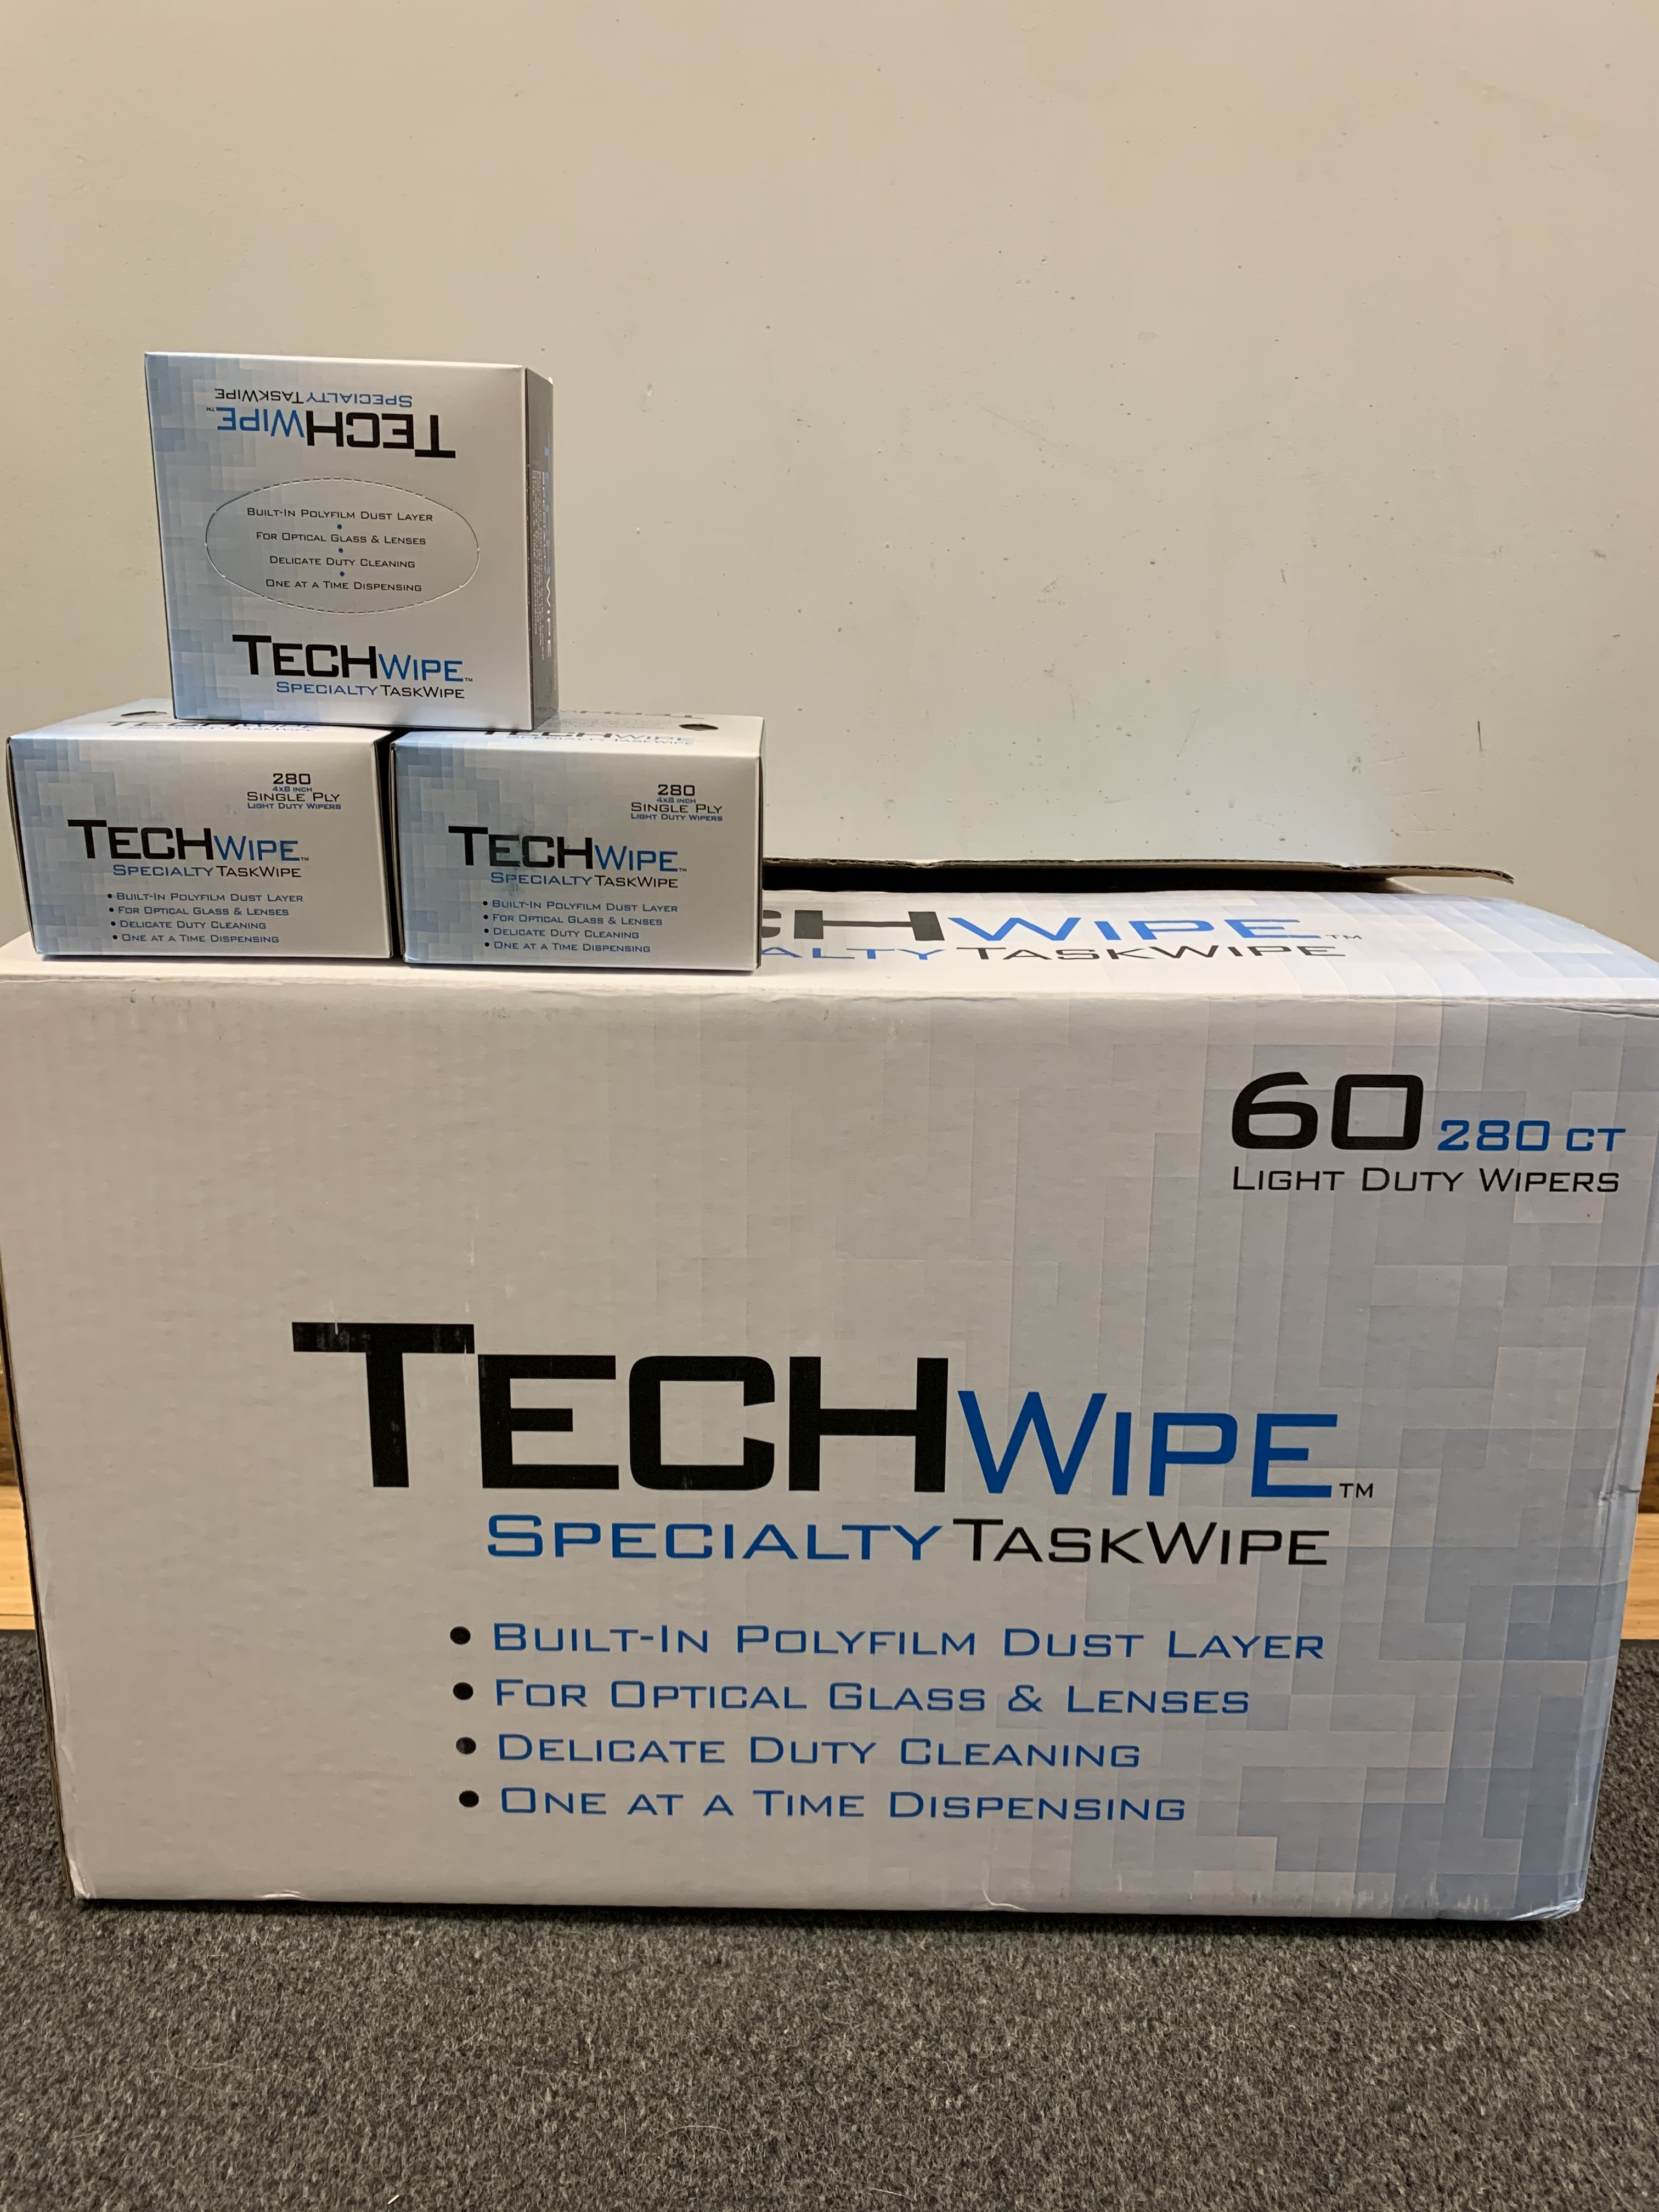 Wiper,4 x 8, 16800, Pop-up 
Box, 60 Boxes/280, White